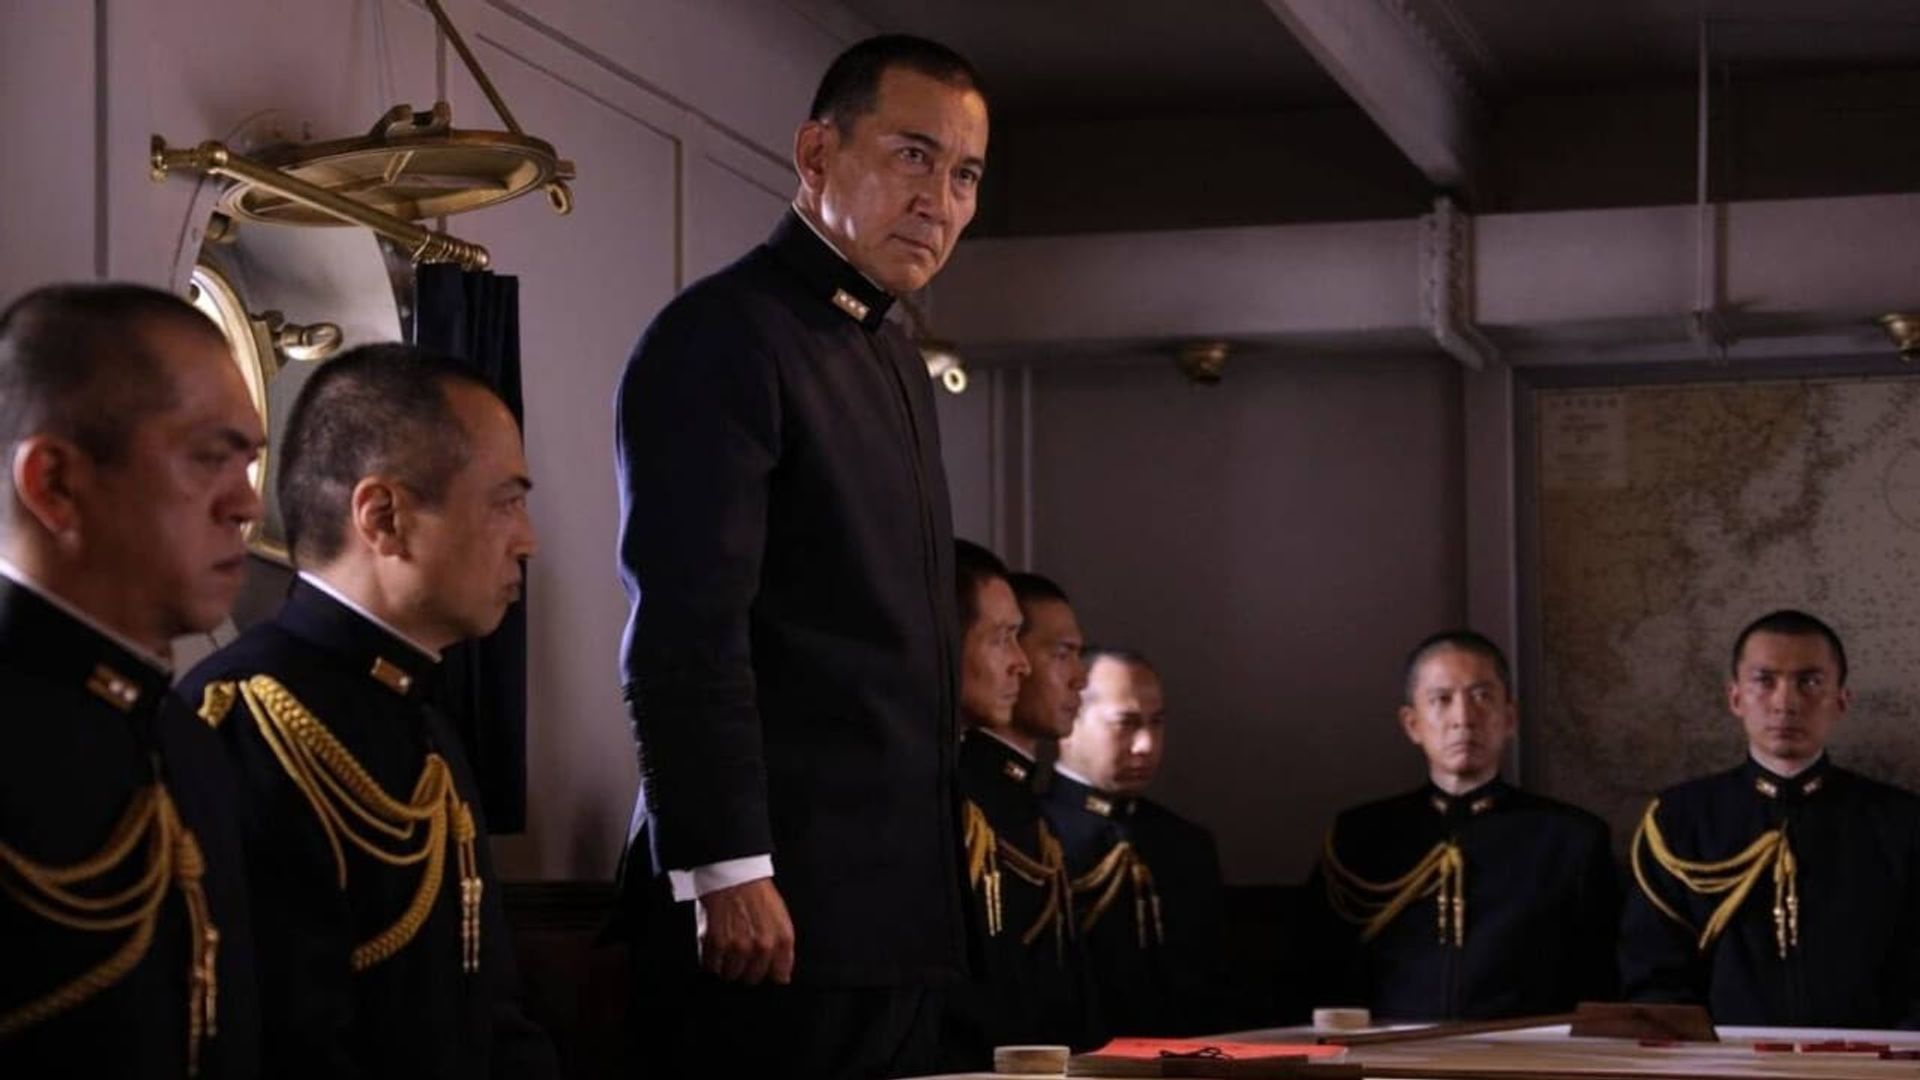 Isoroku Yamamoto, the Commander-in-Chief of the Combined Fleet background